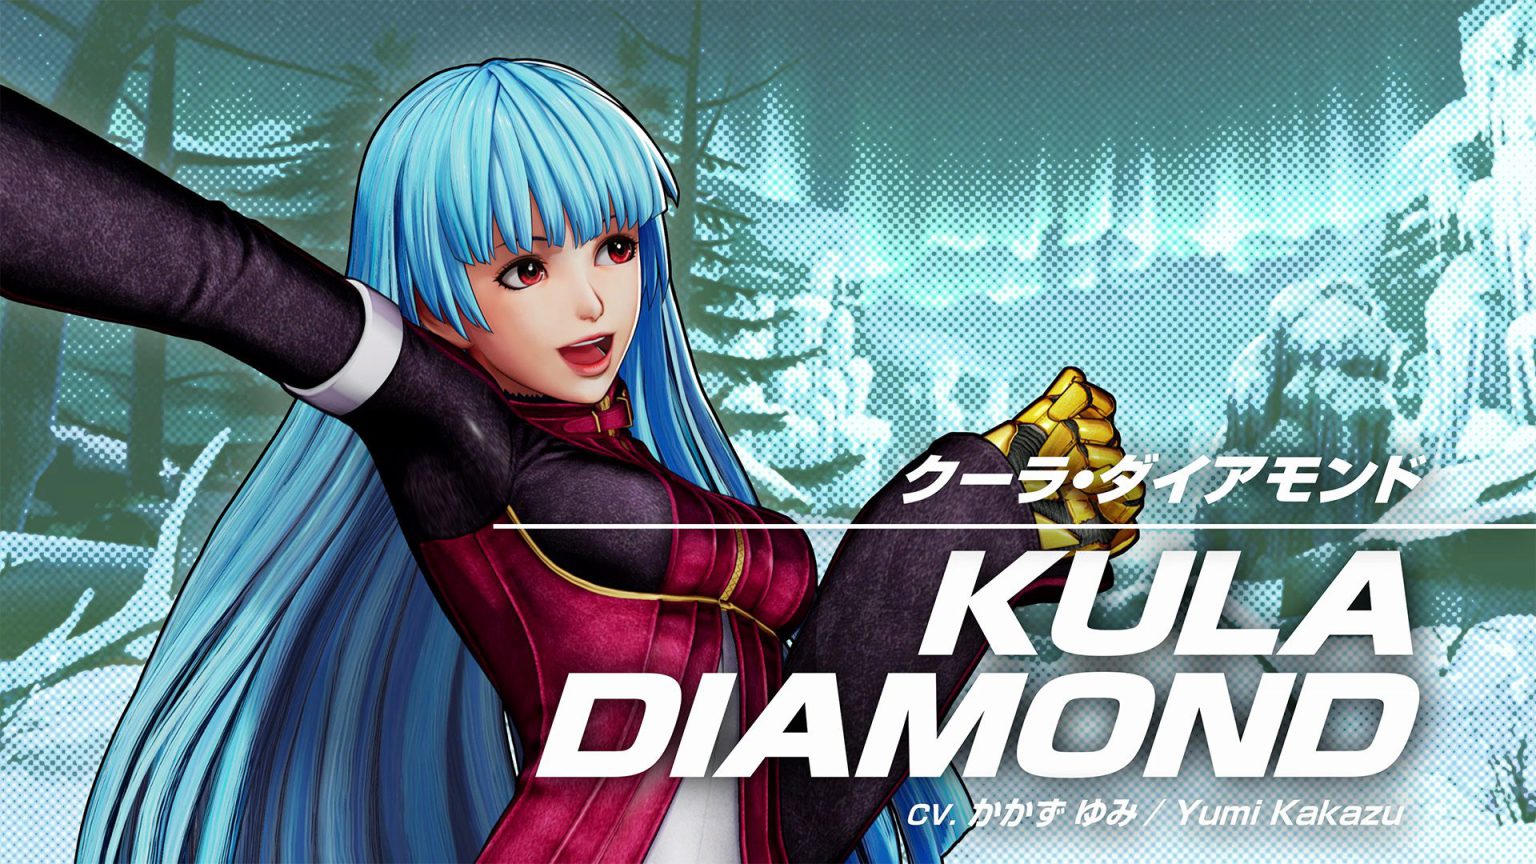 kula diamond - the king of fighters 15 - generacion xbox